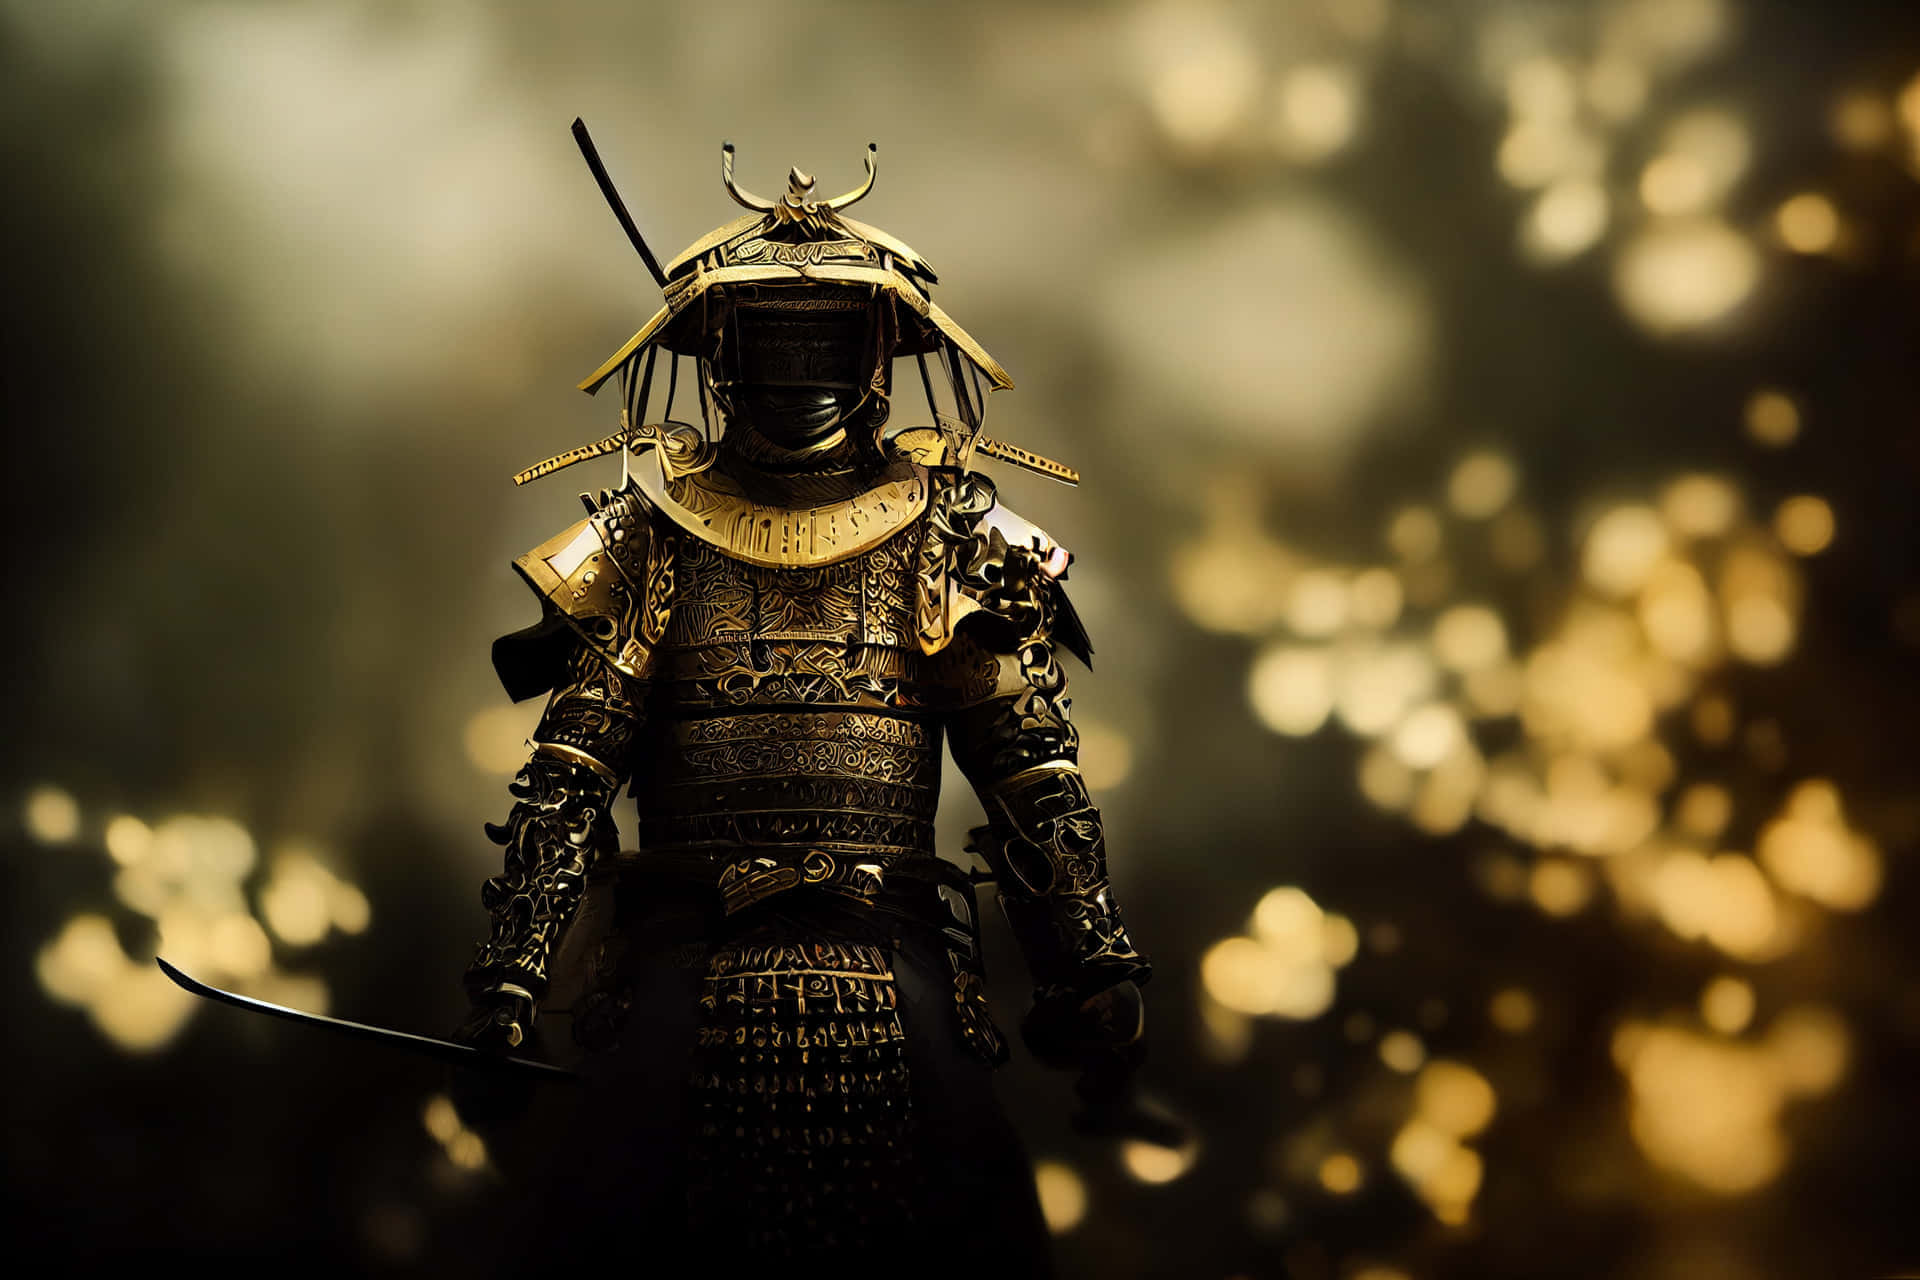 Traditional Samurai Armor on Display Wallpaper